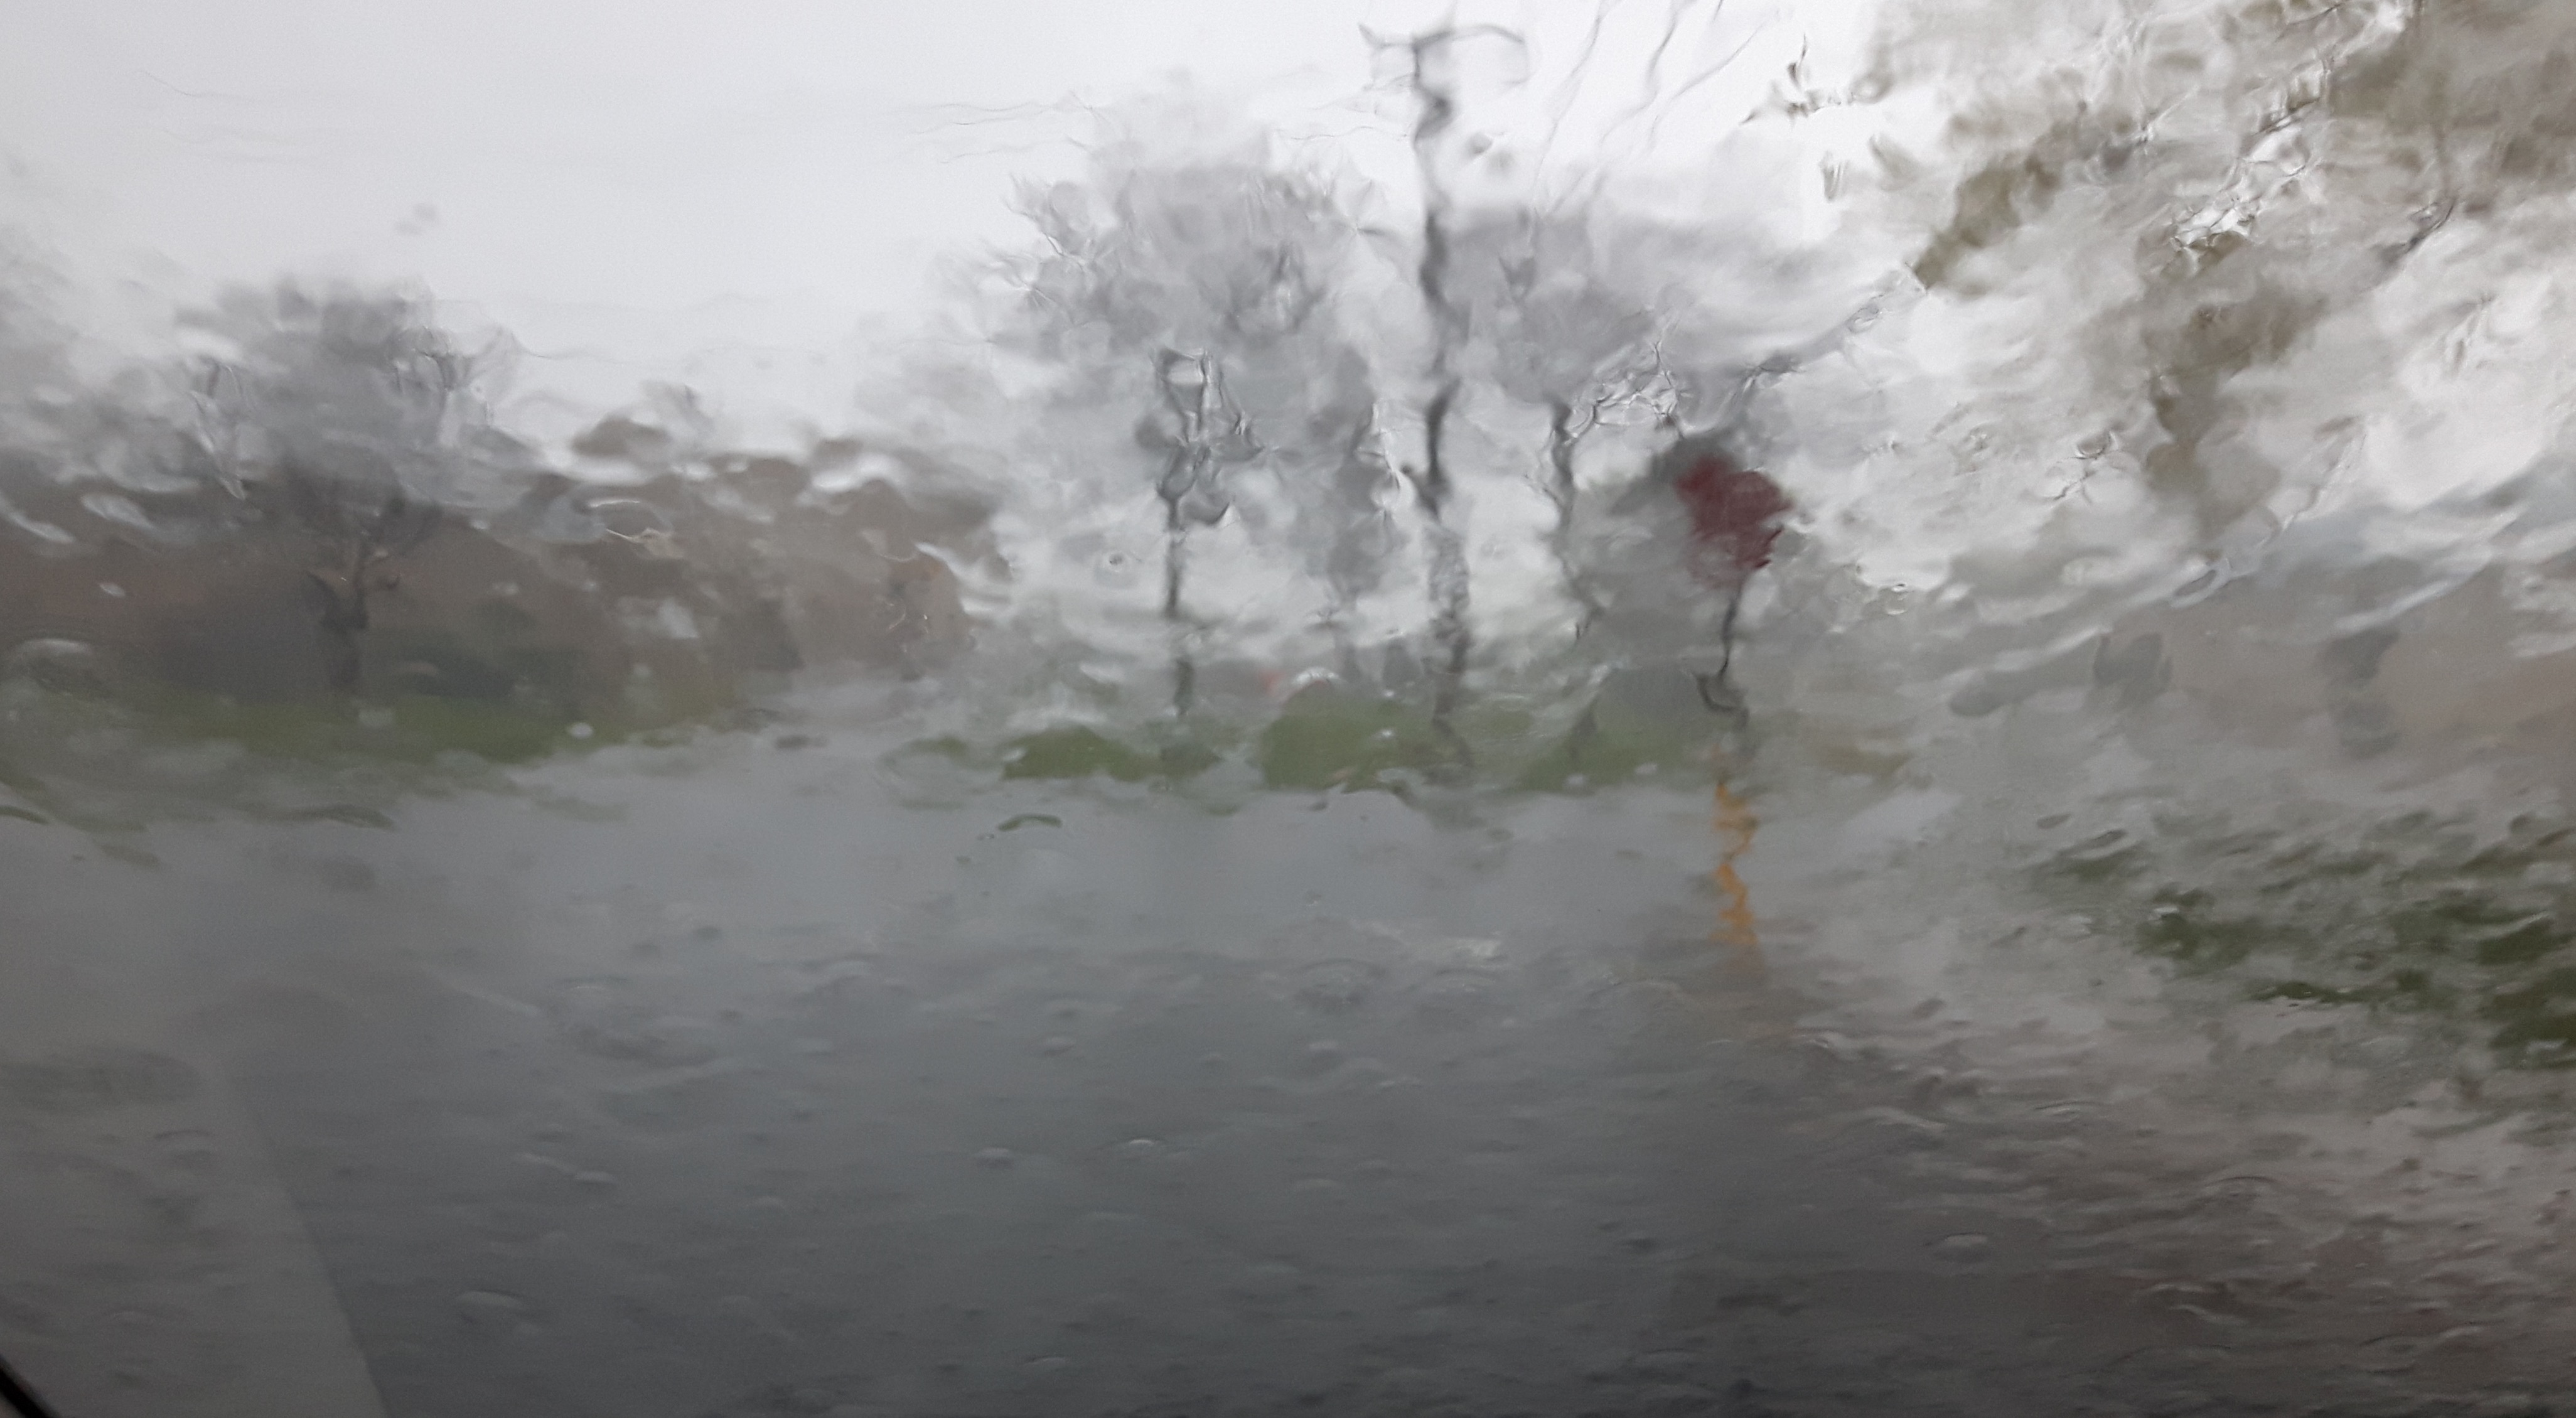 Rain, through my windshield